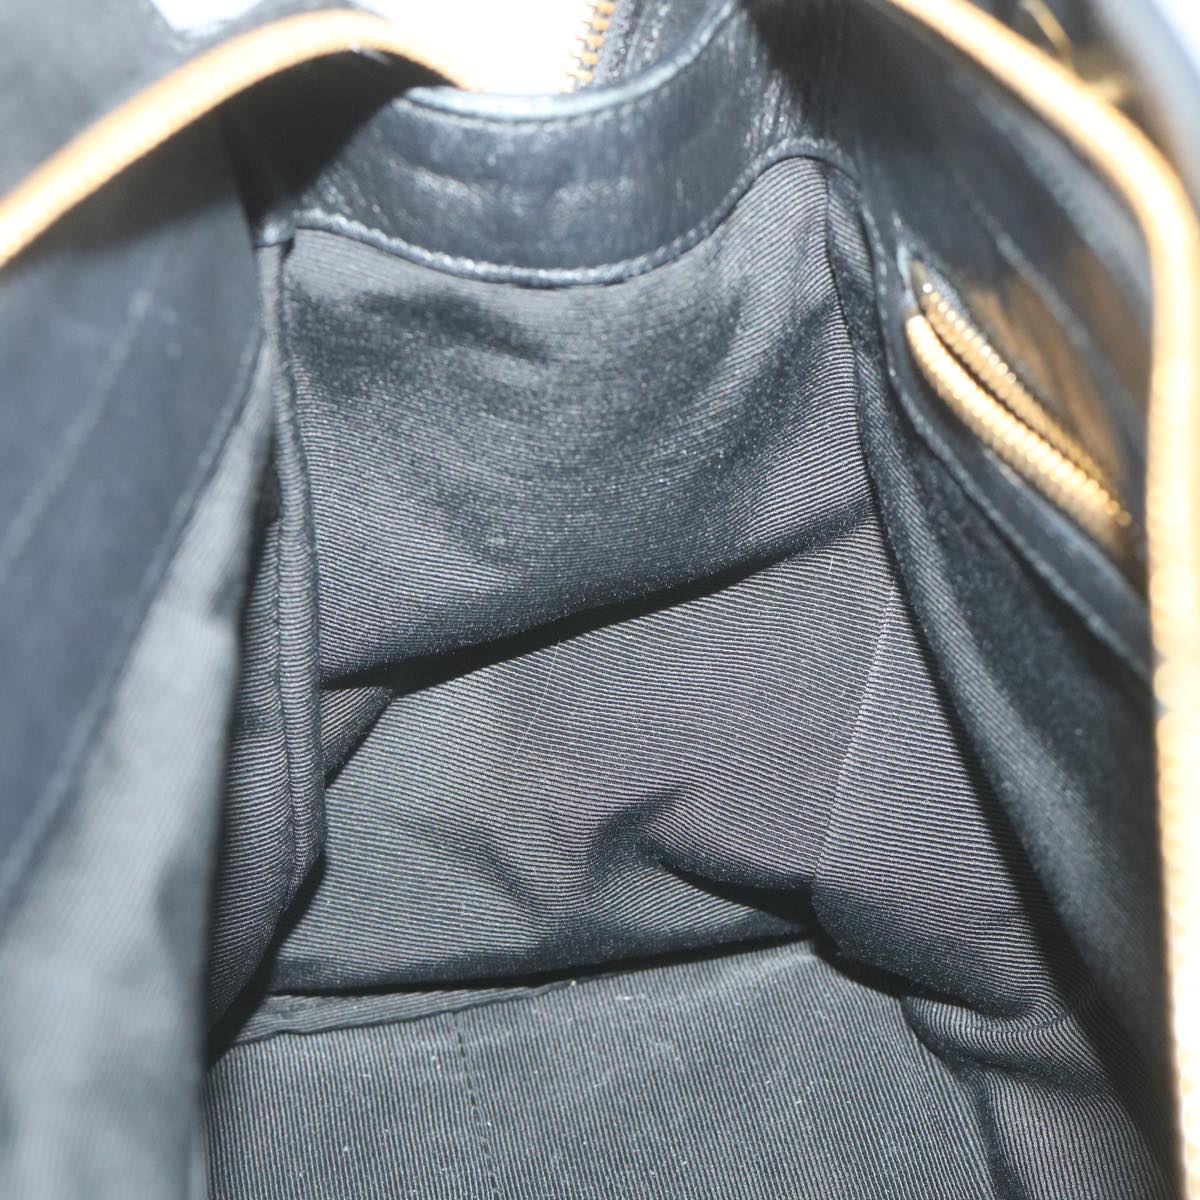 Salvatore Ferragamo Chain Shoulder Bag Leather Black Auth 59997